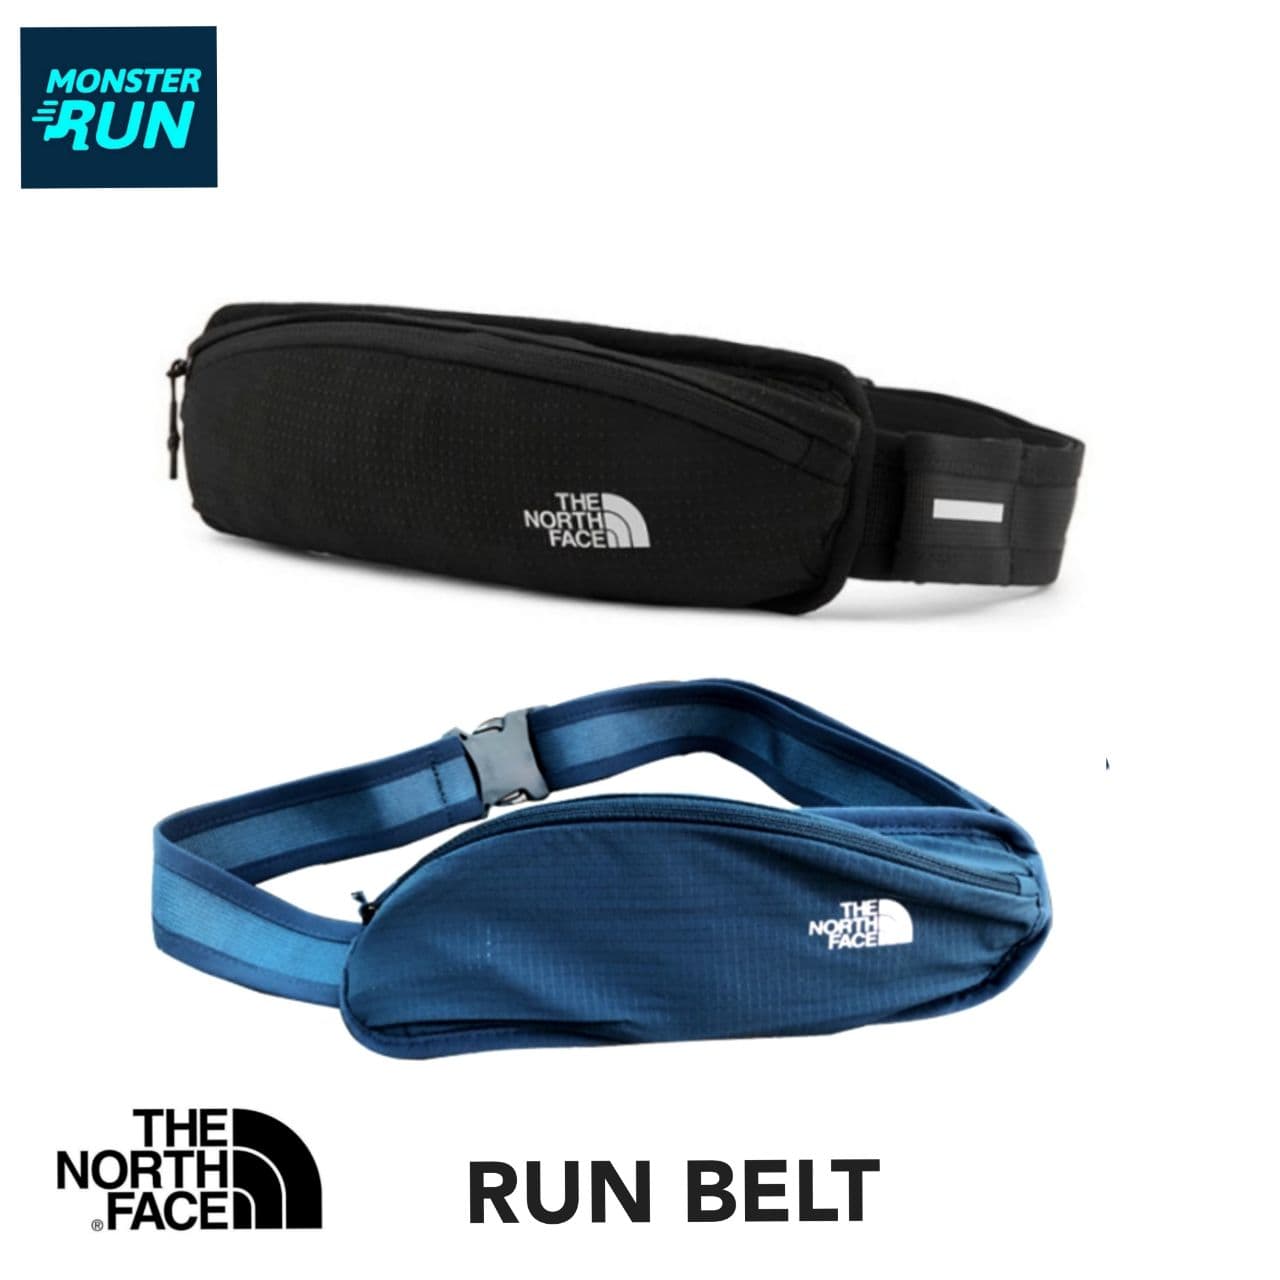 Run Belt Bag, The North Face